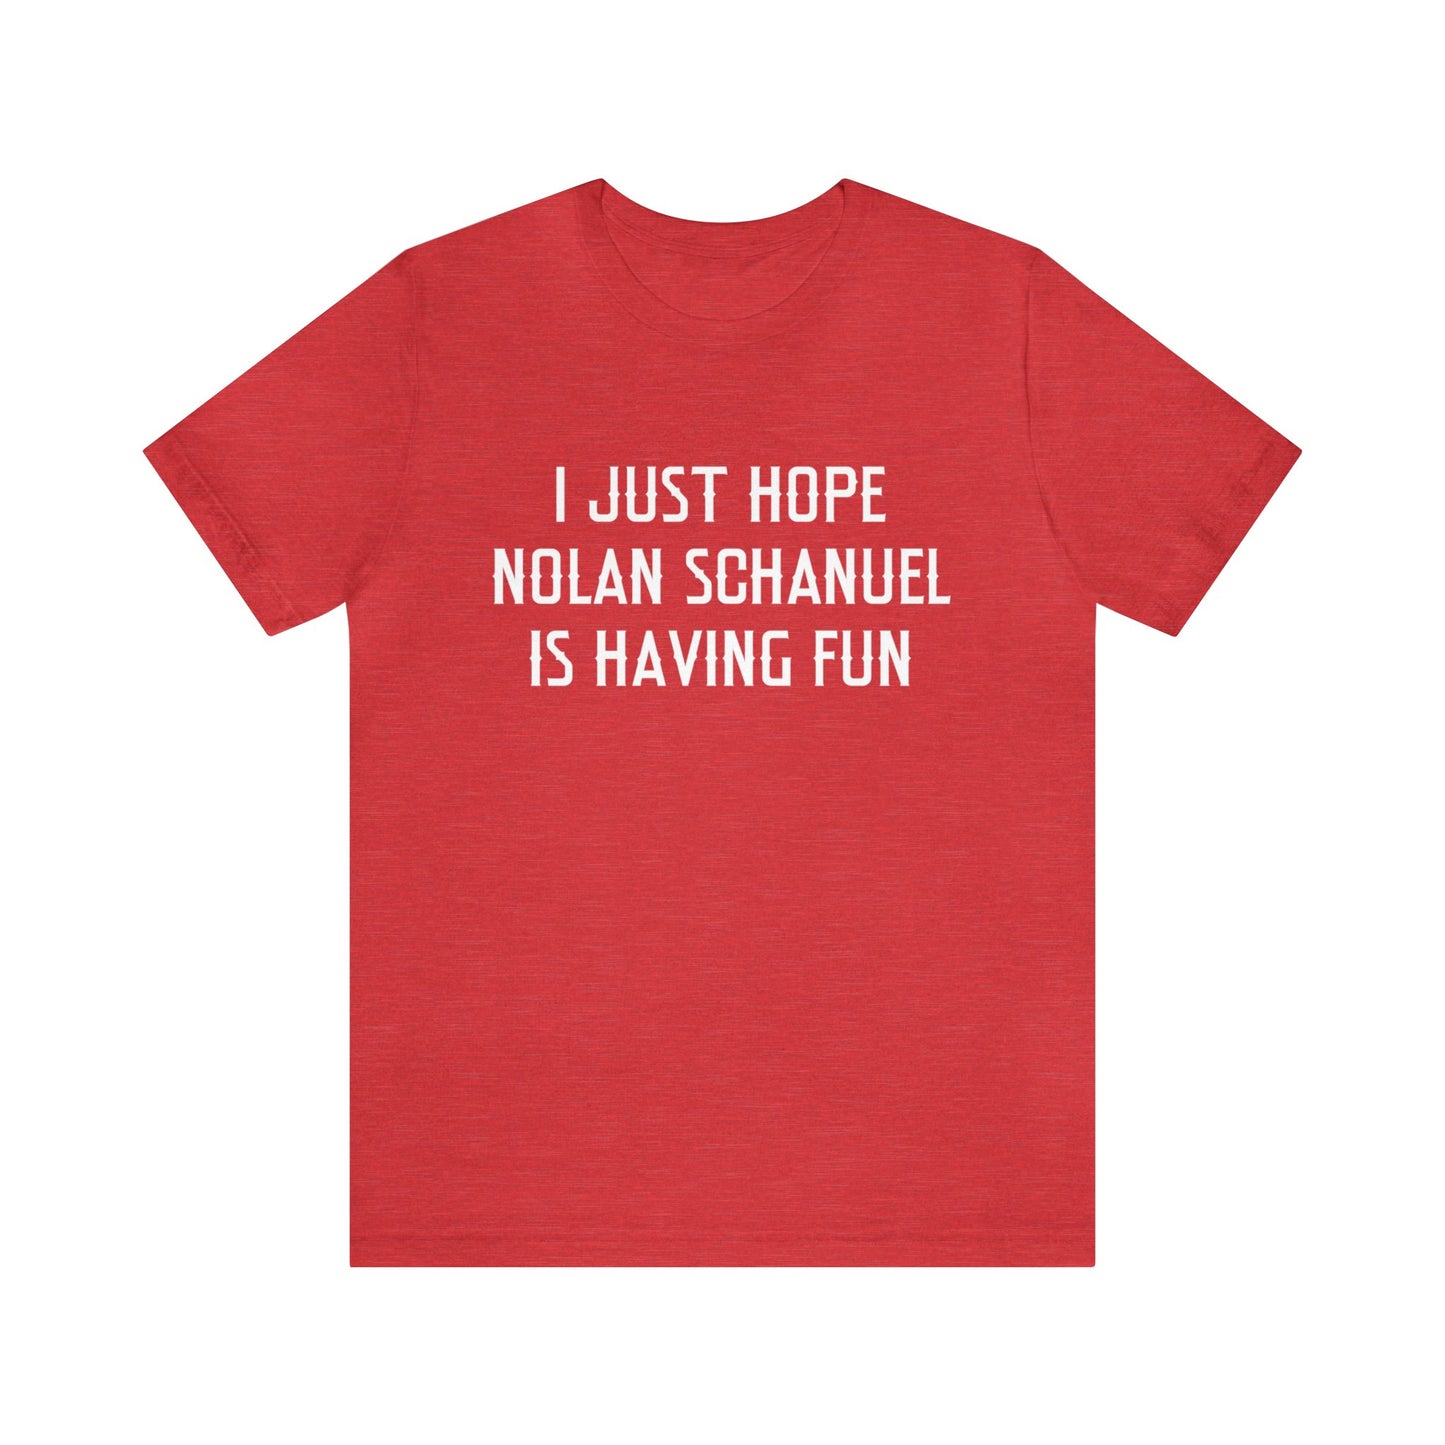 Nolan Schanuel Having Fun - Unisex T-shirt